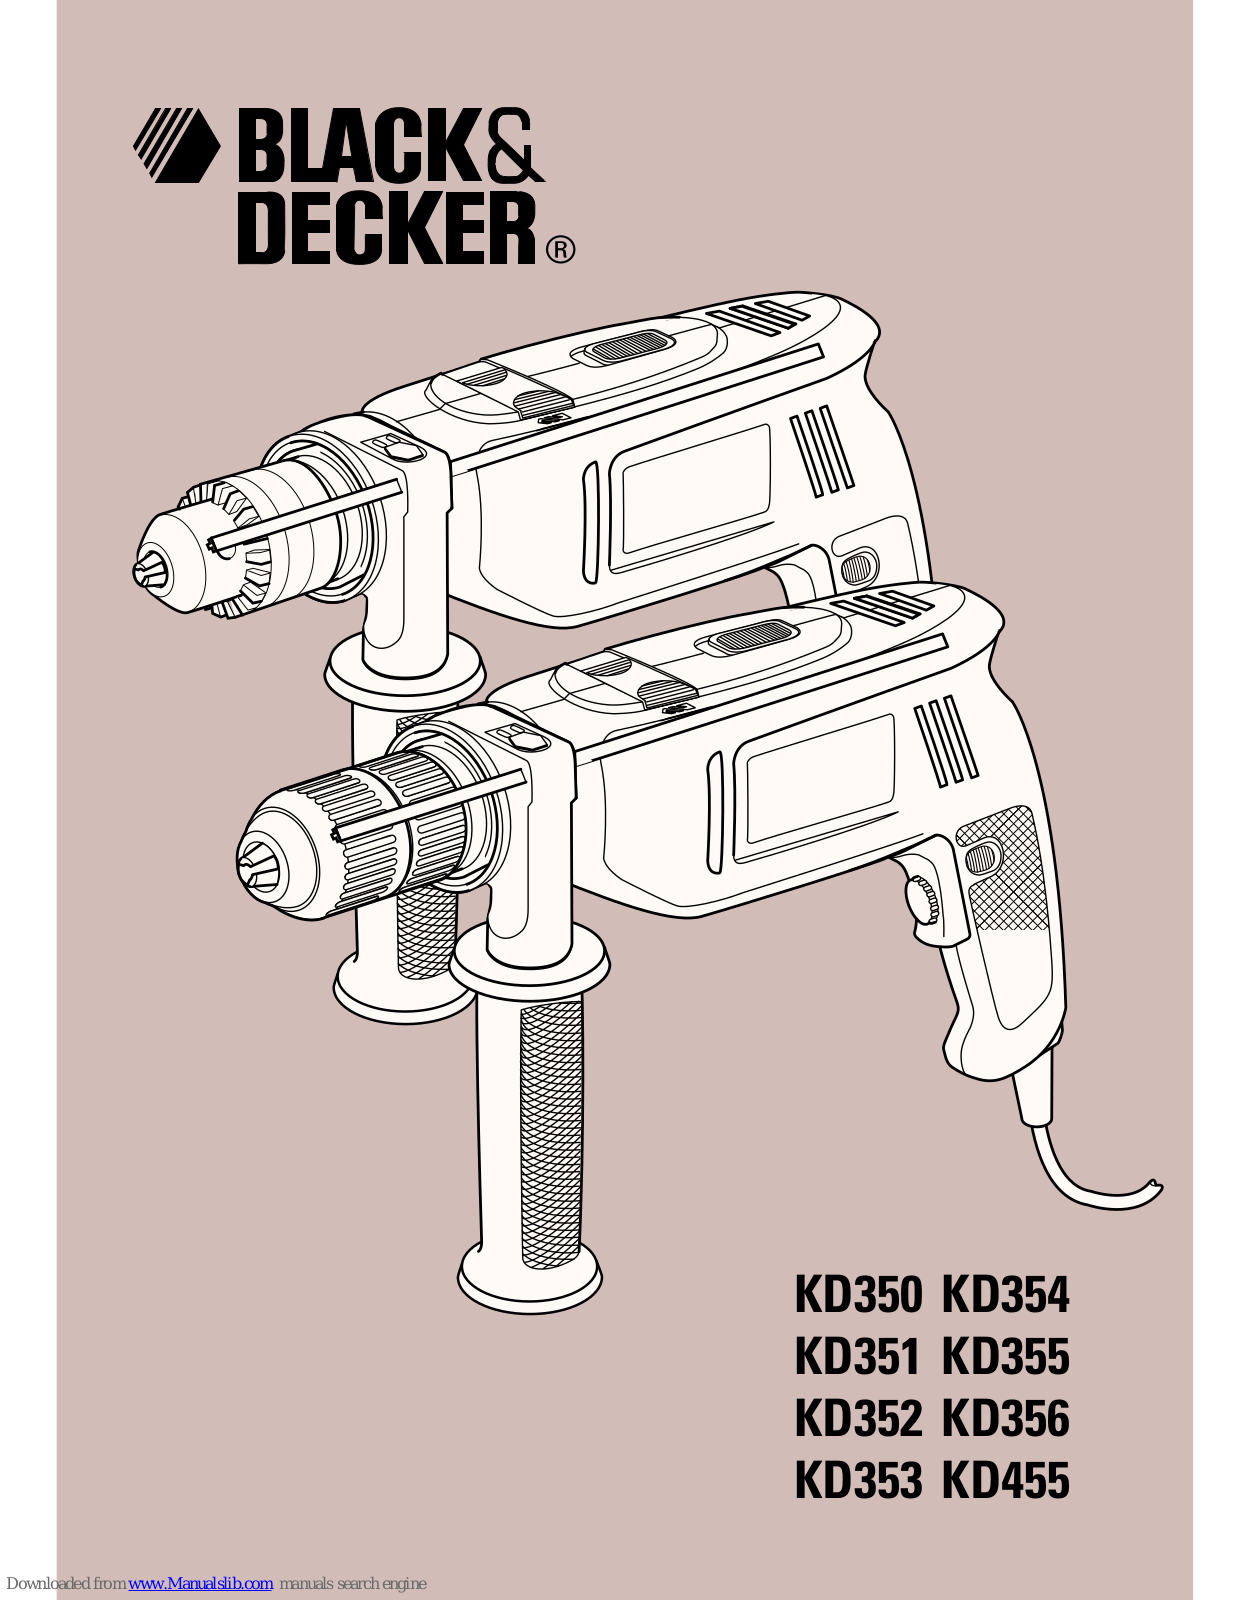 Black & Decker KD350, KD352, KD356, KD355, KD353 Manual